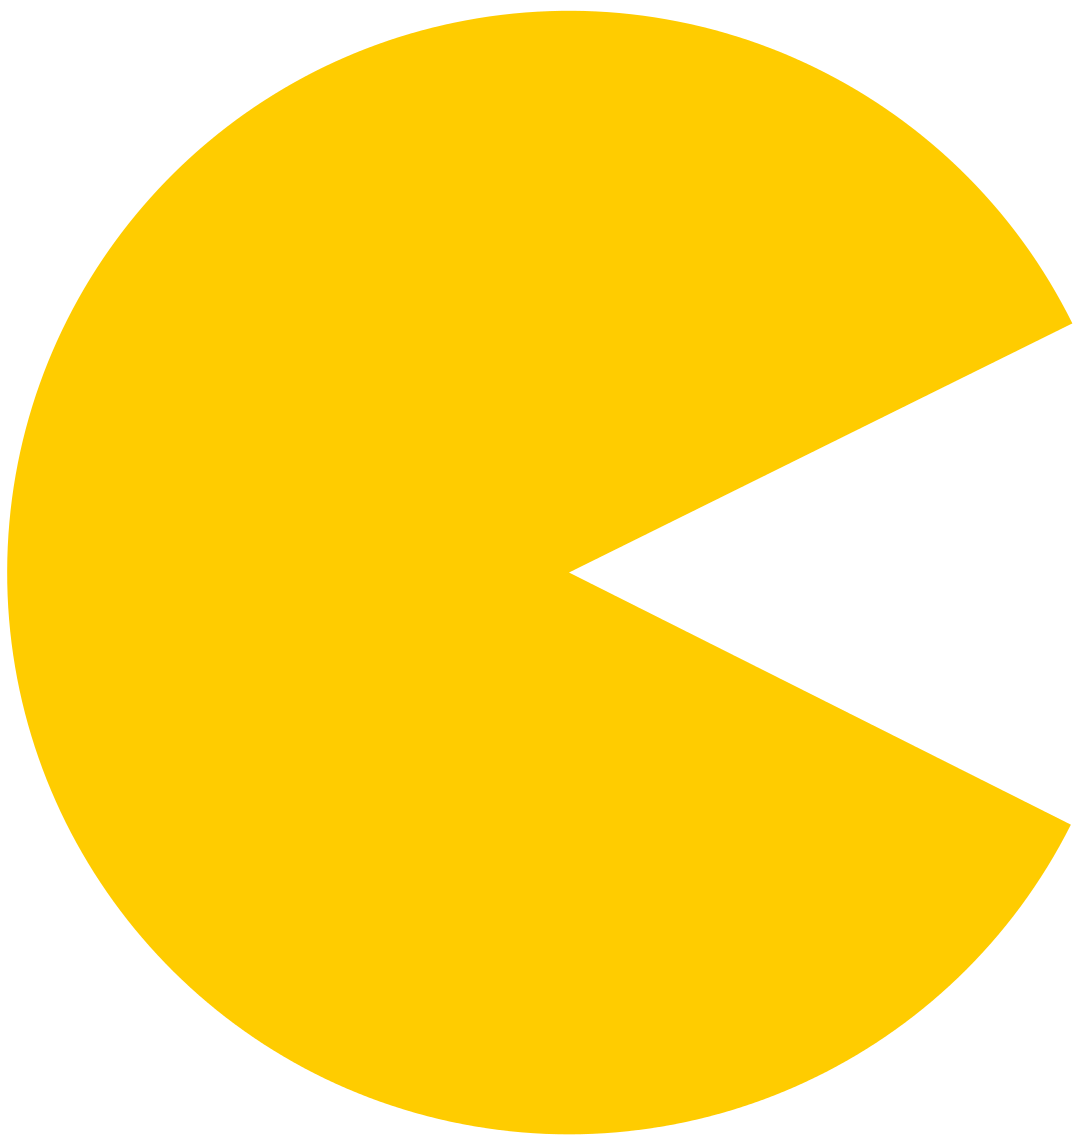 Pacman shape